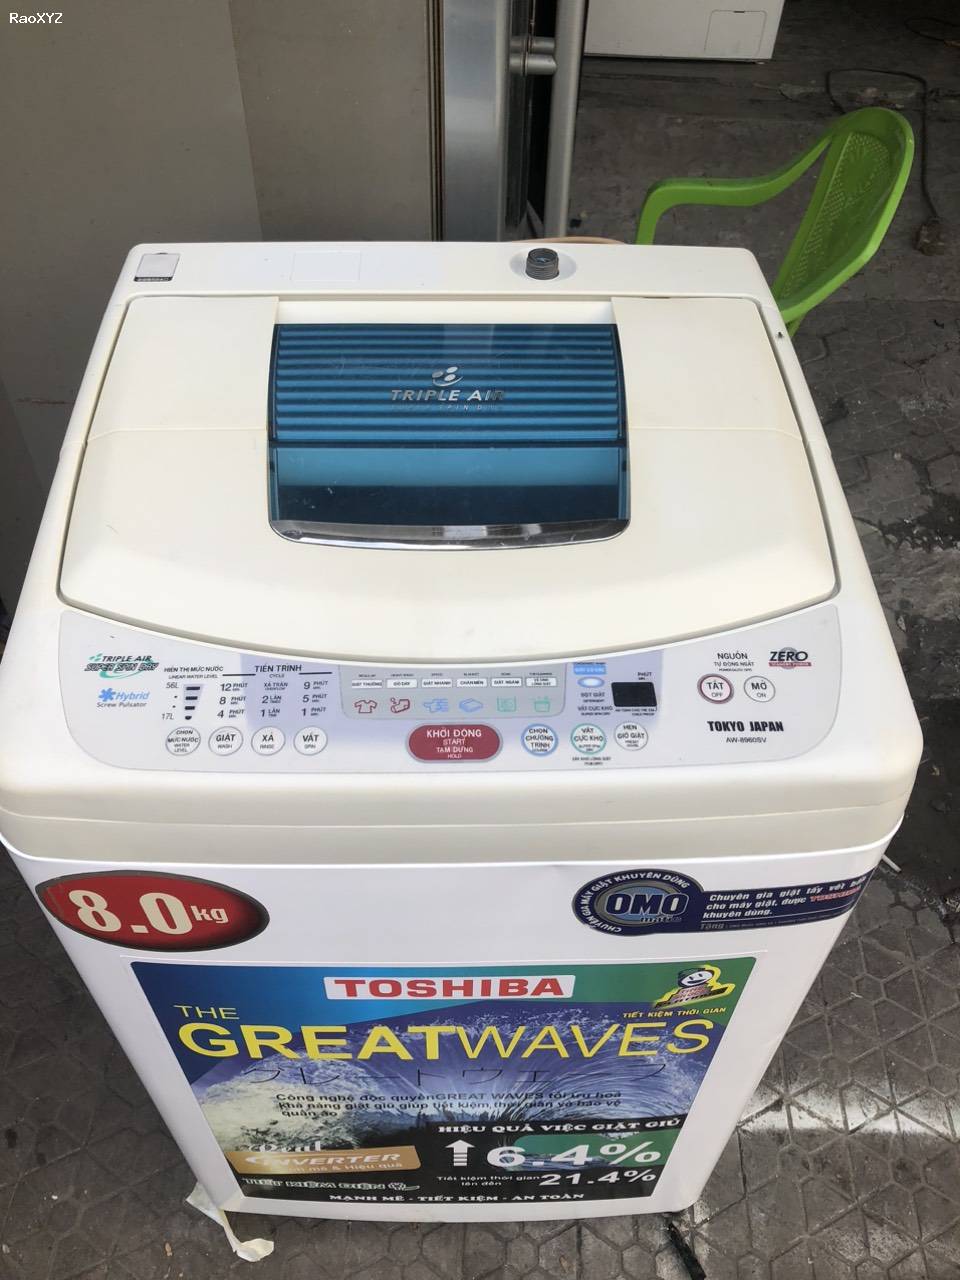 Máy giặt toshiba 8kg giặt tốt